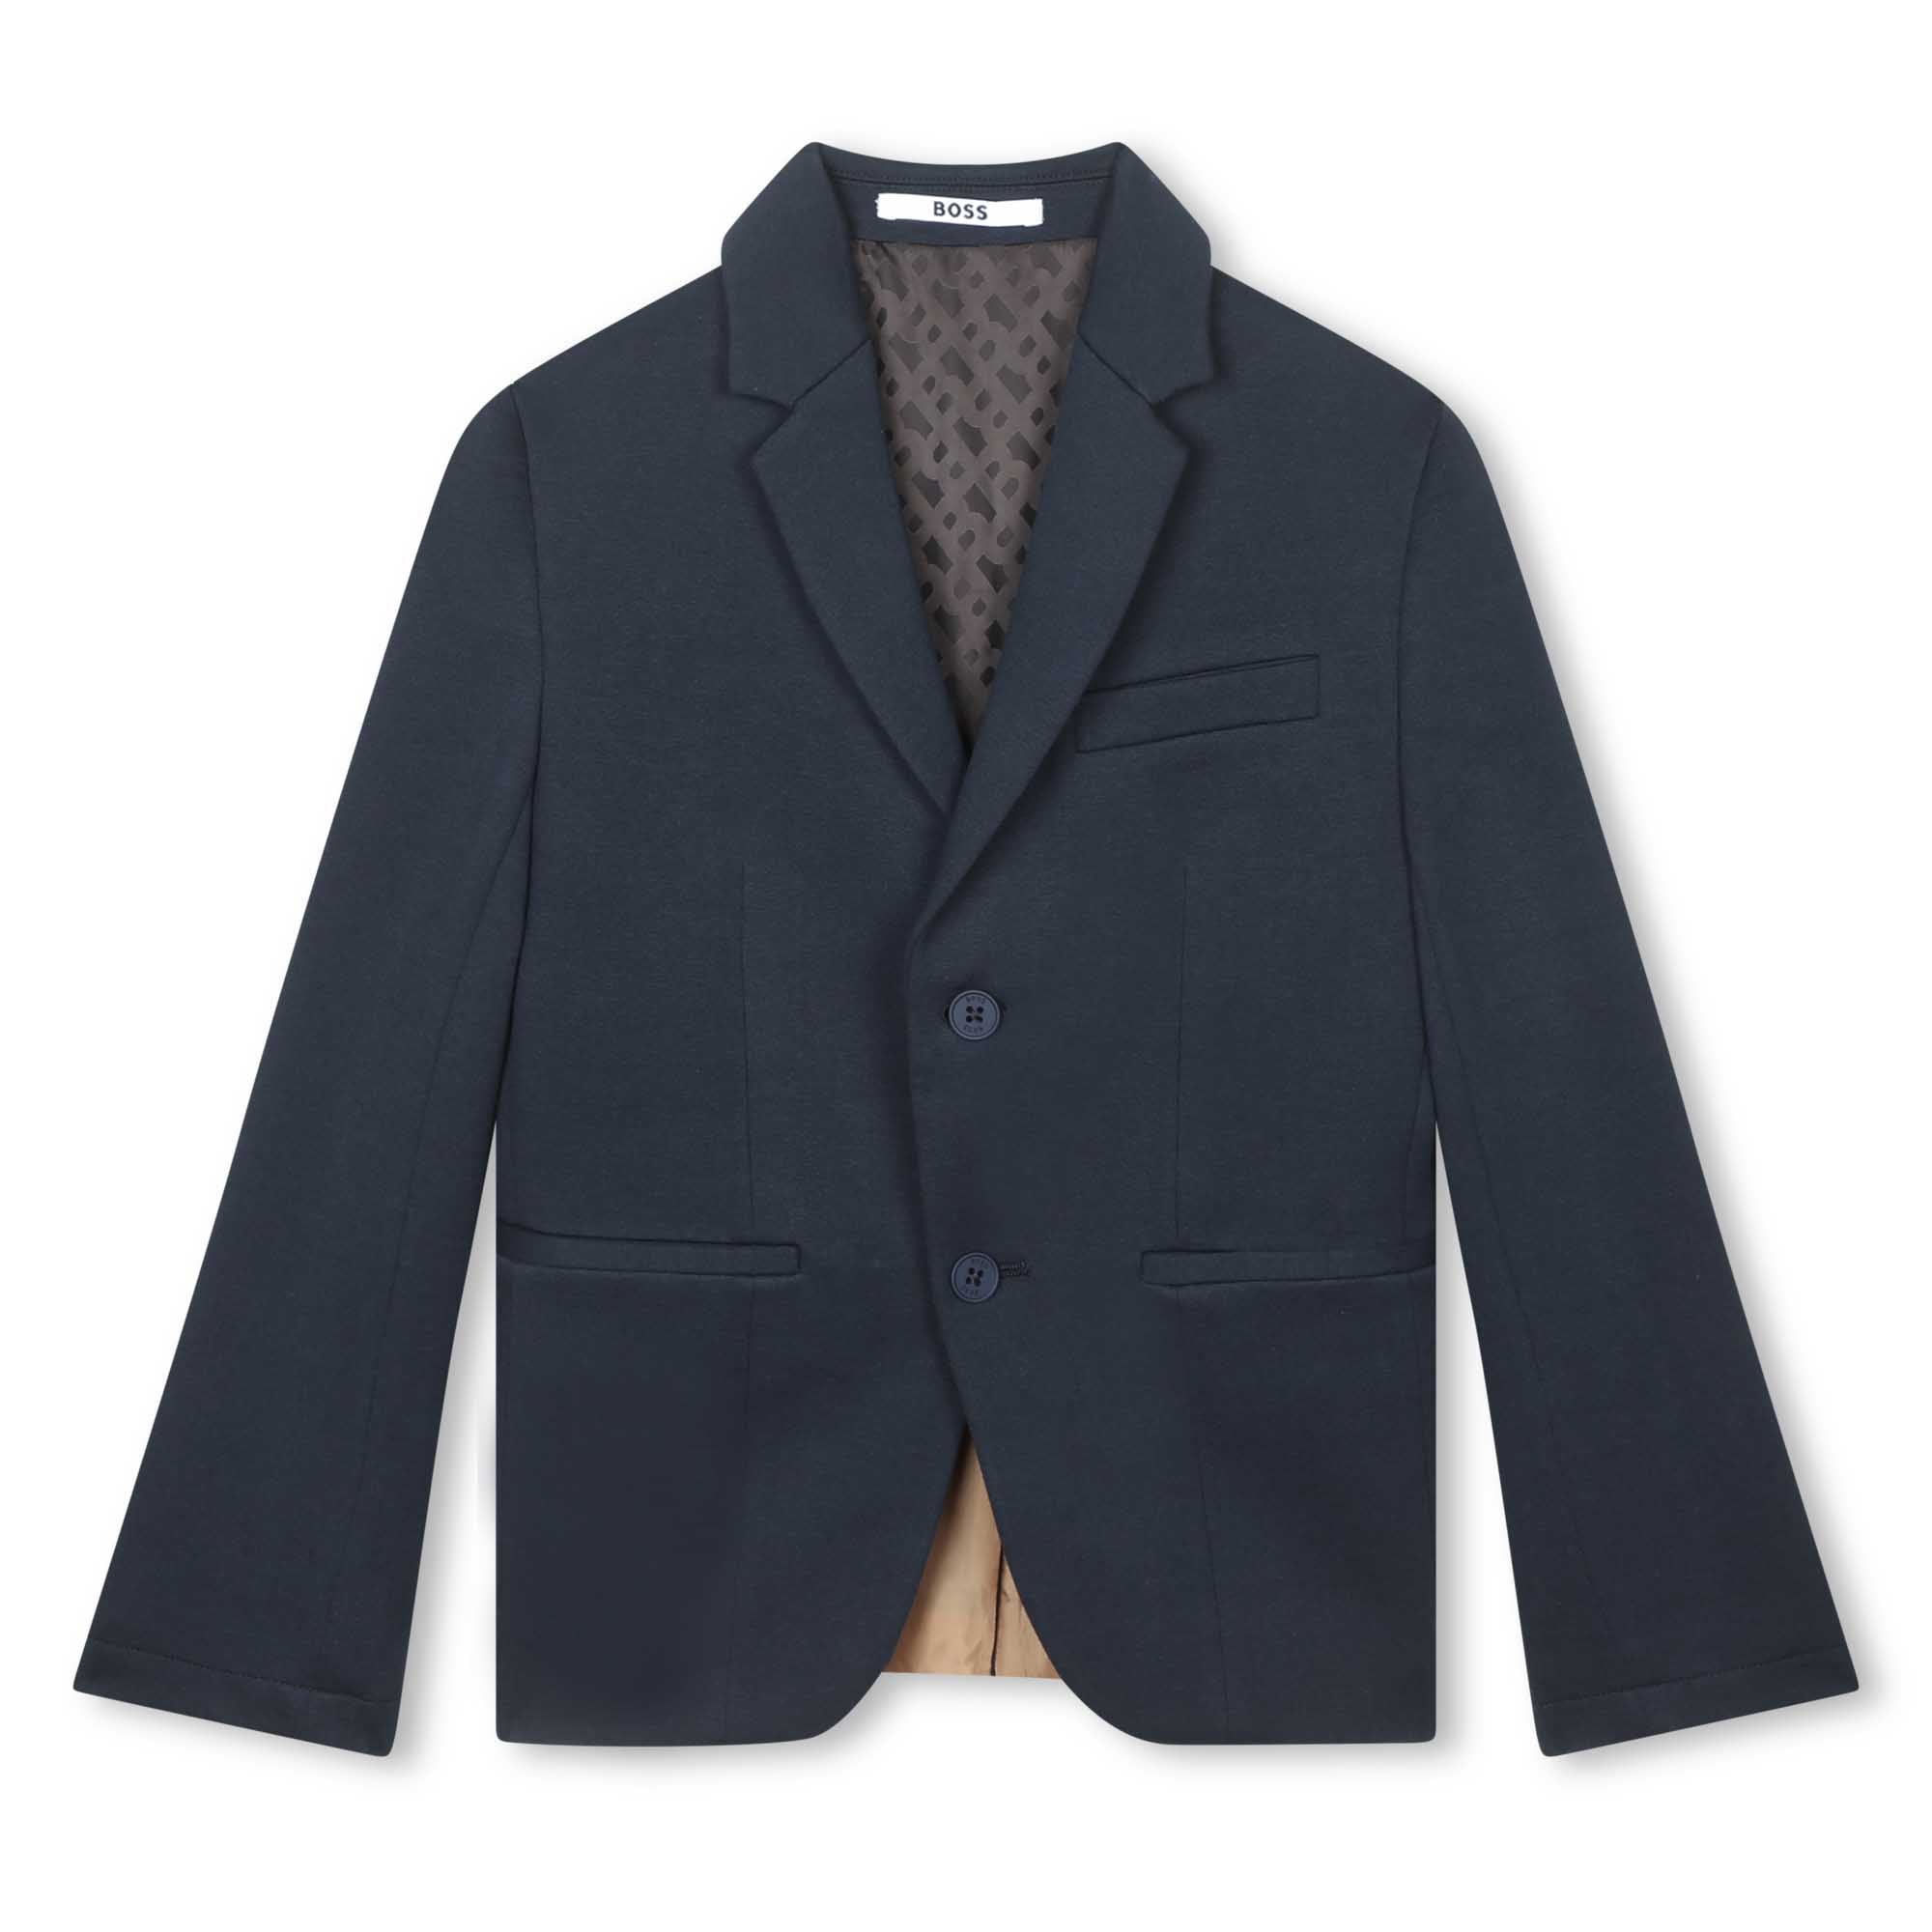 Hugo Boss Suit Jacket Style: J26522